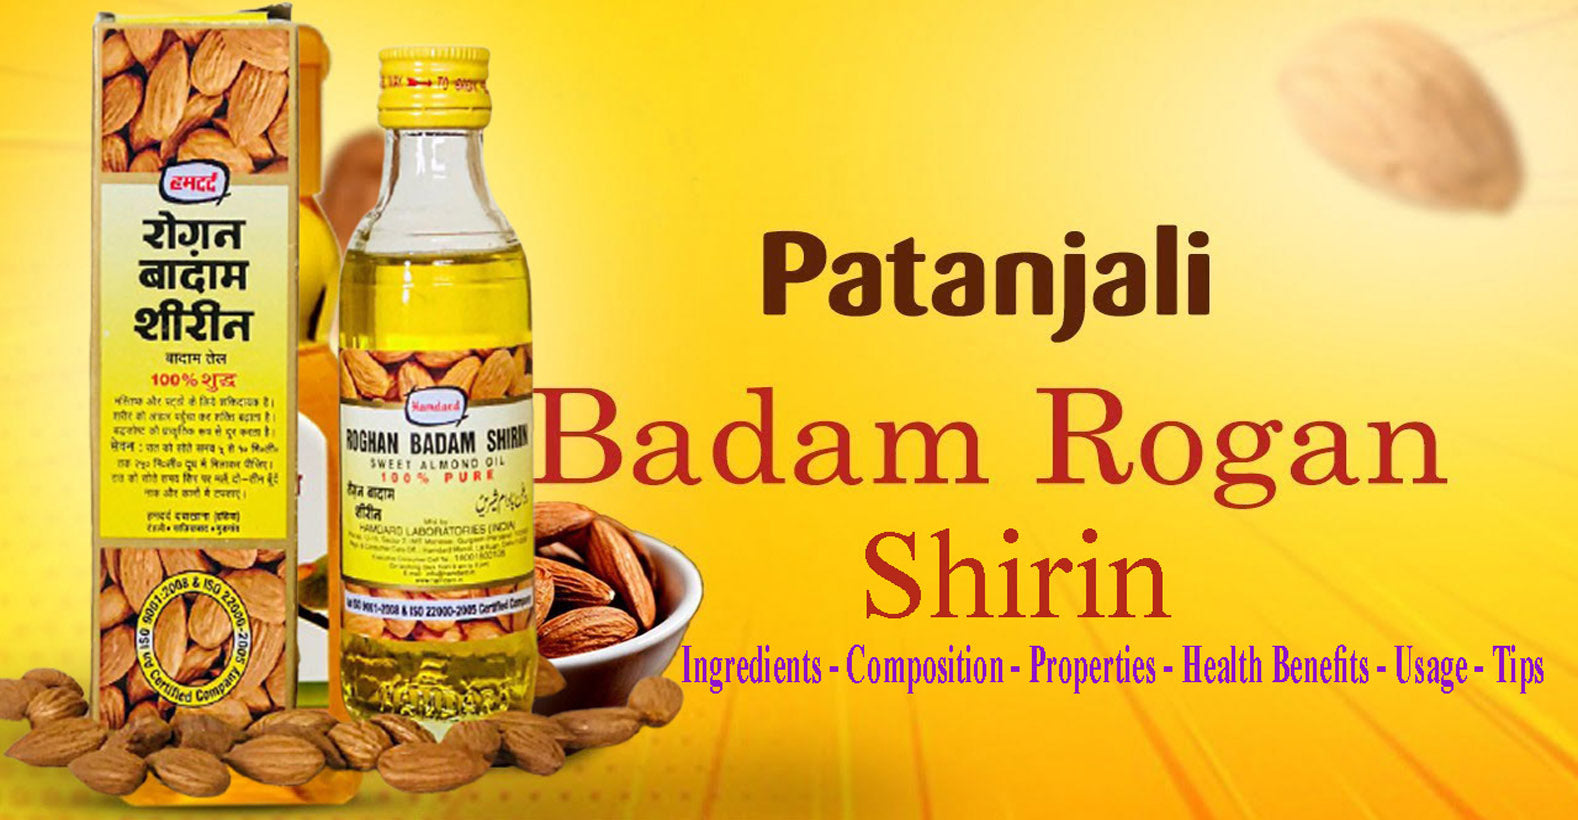 Patanjali Roghan Badam Shirin - Ingredients, Composition, Properties, Health Benefits, Usage, Tips